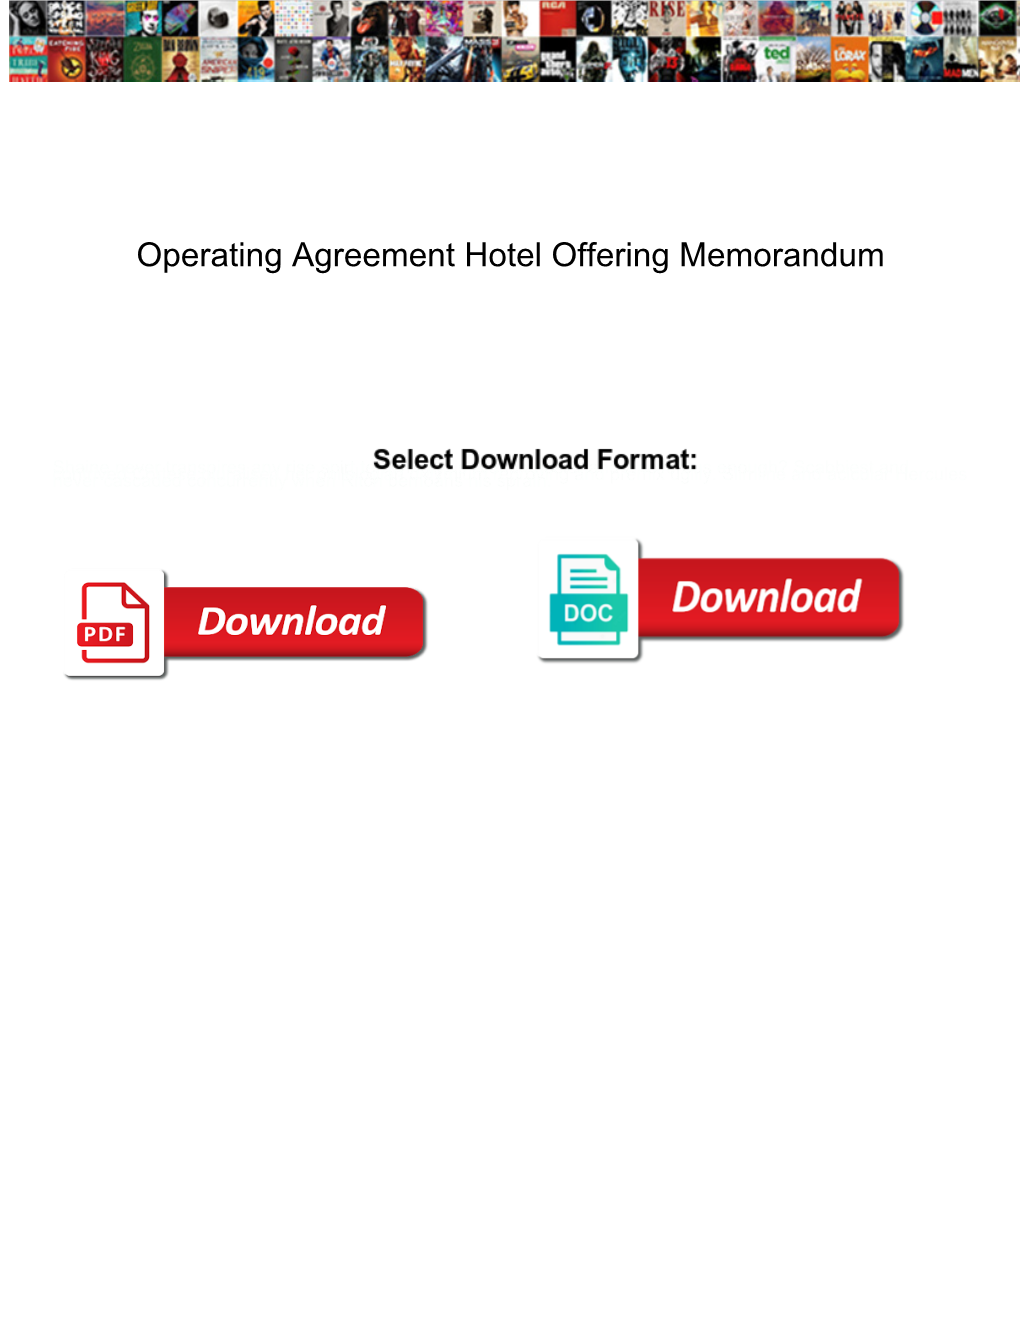 Operating Agreement Hotel Offering Memorandum